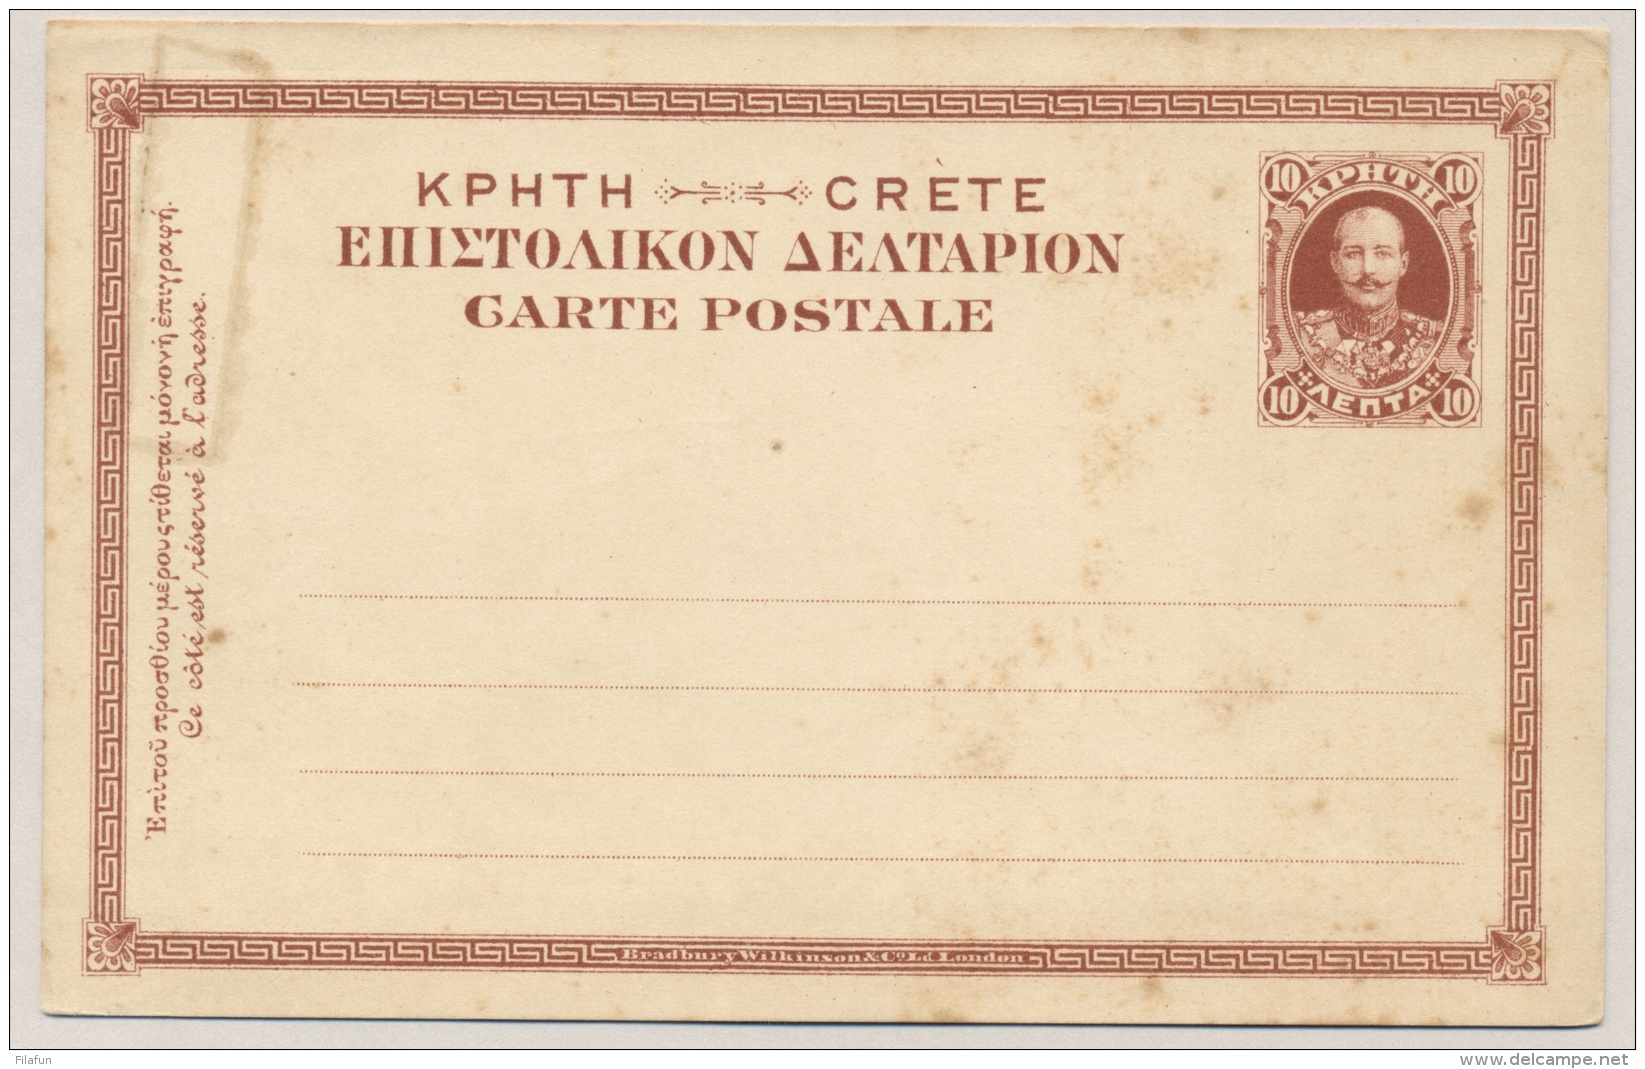 Crete - 1900 - 10L Prince Georg Postcard - Not Used - Kreta